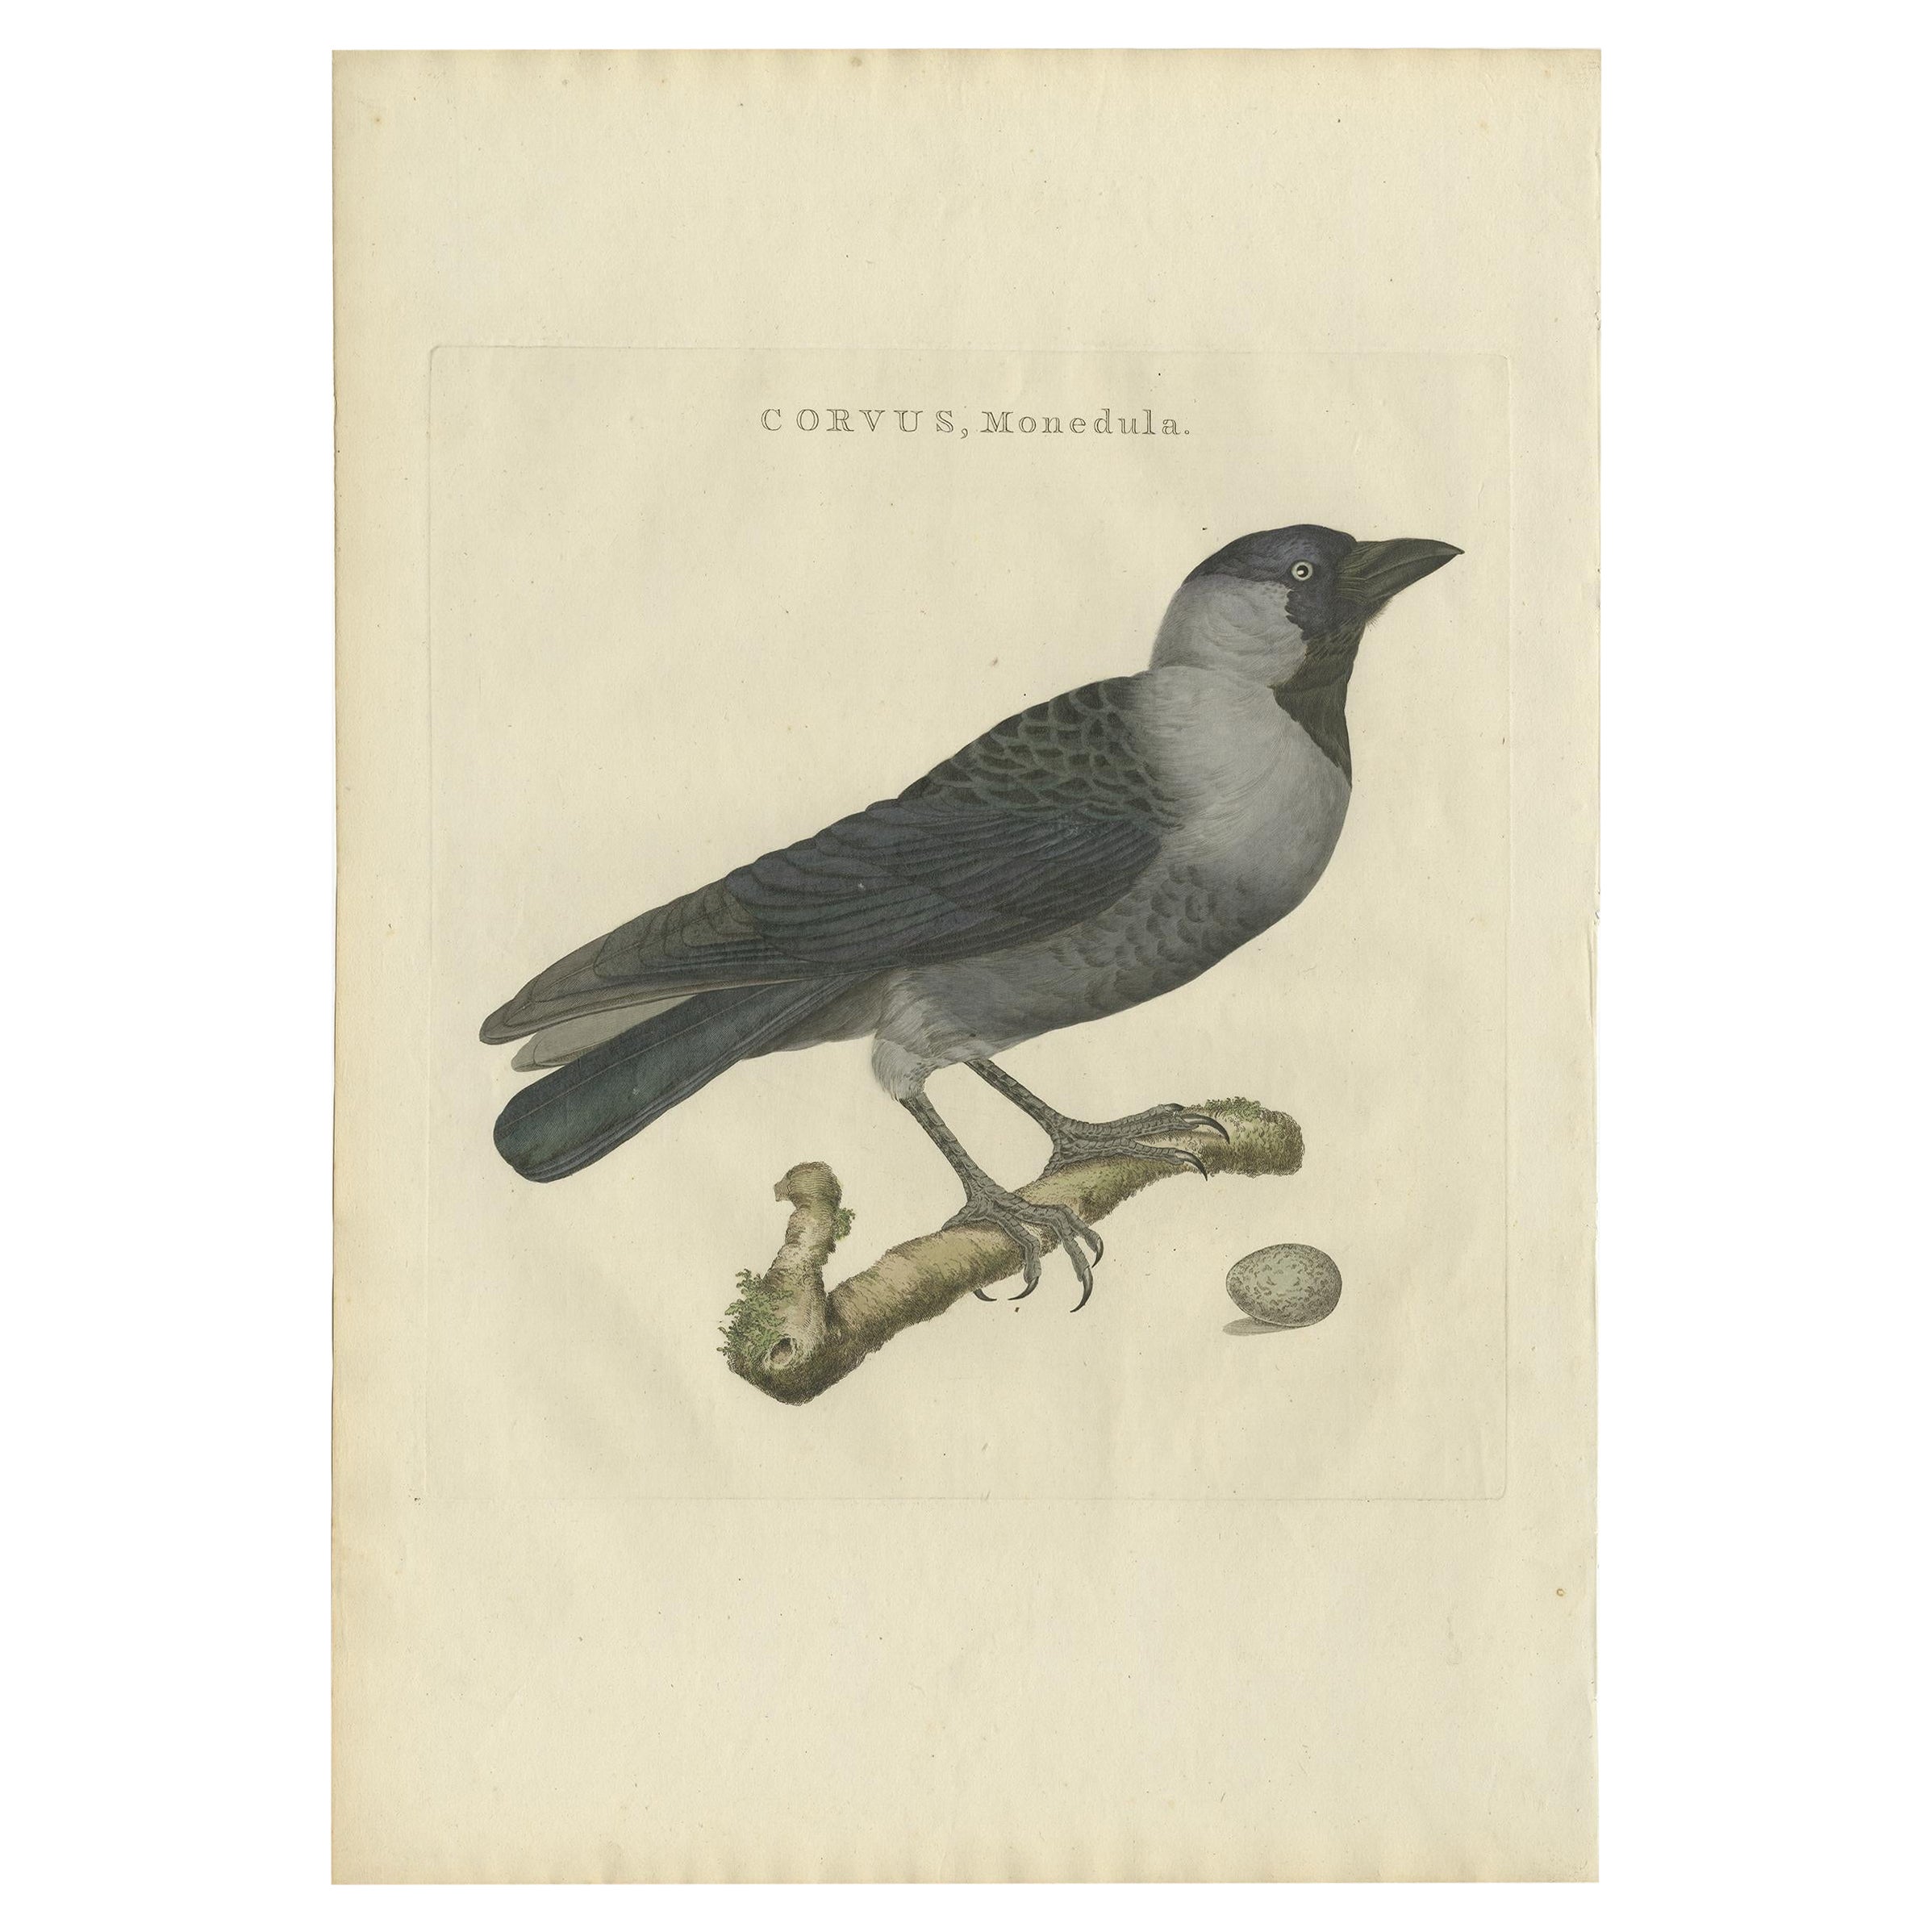 Antique Bird Print of the Western Jackdaw by Sepp & Nozeman, 1797